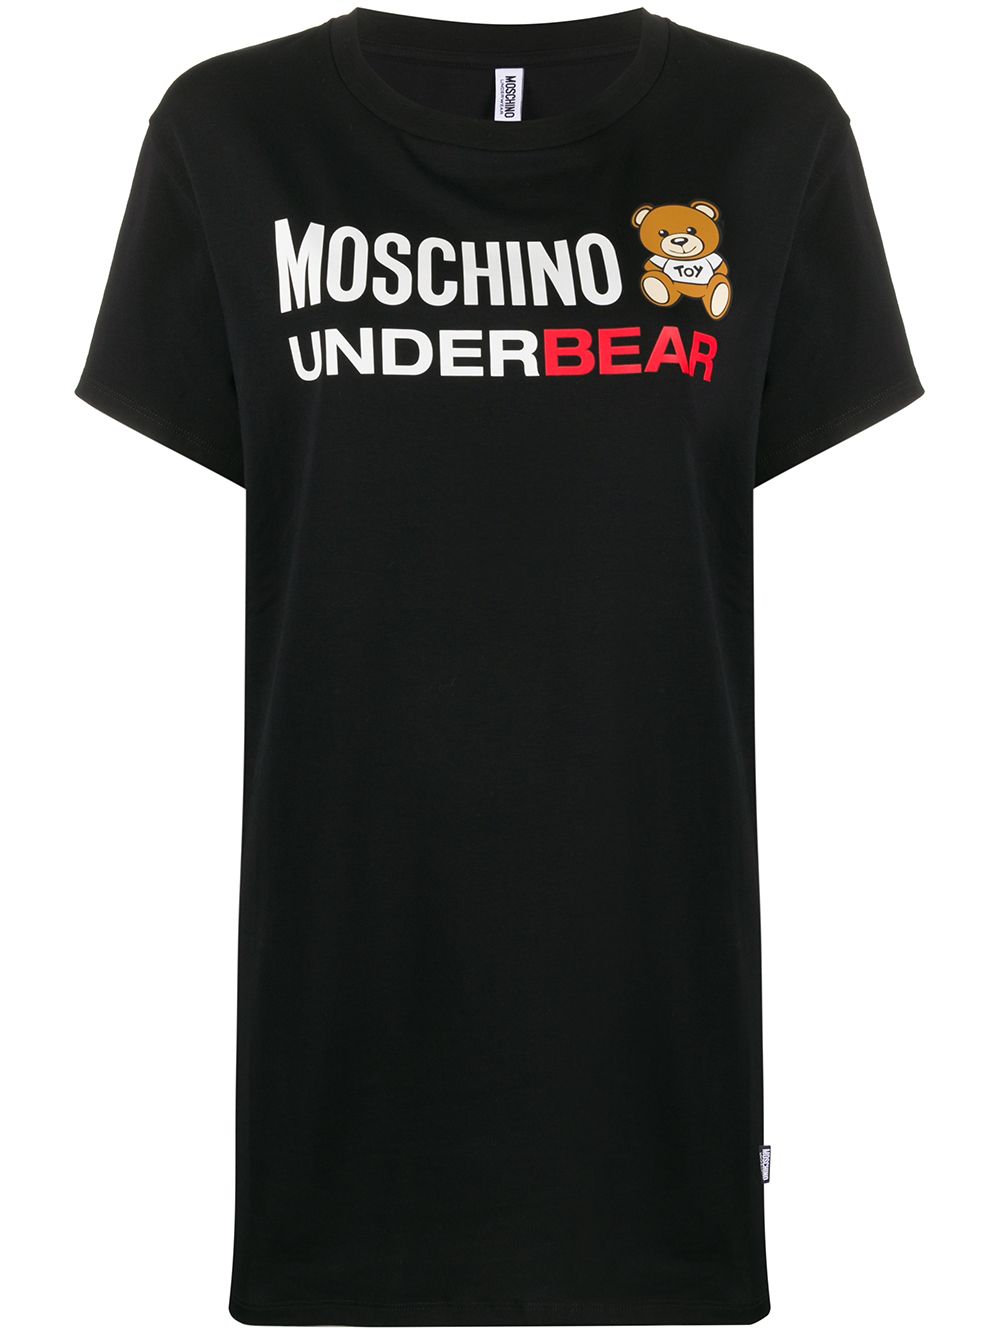 moschino underbear t shirt